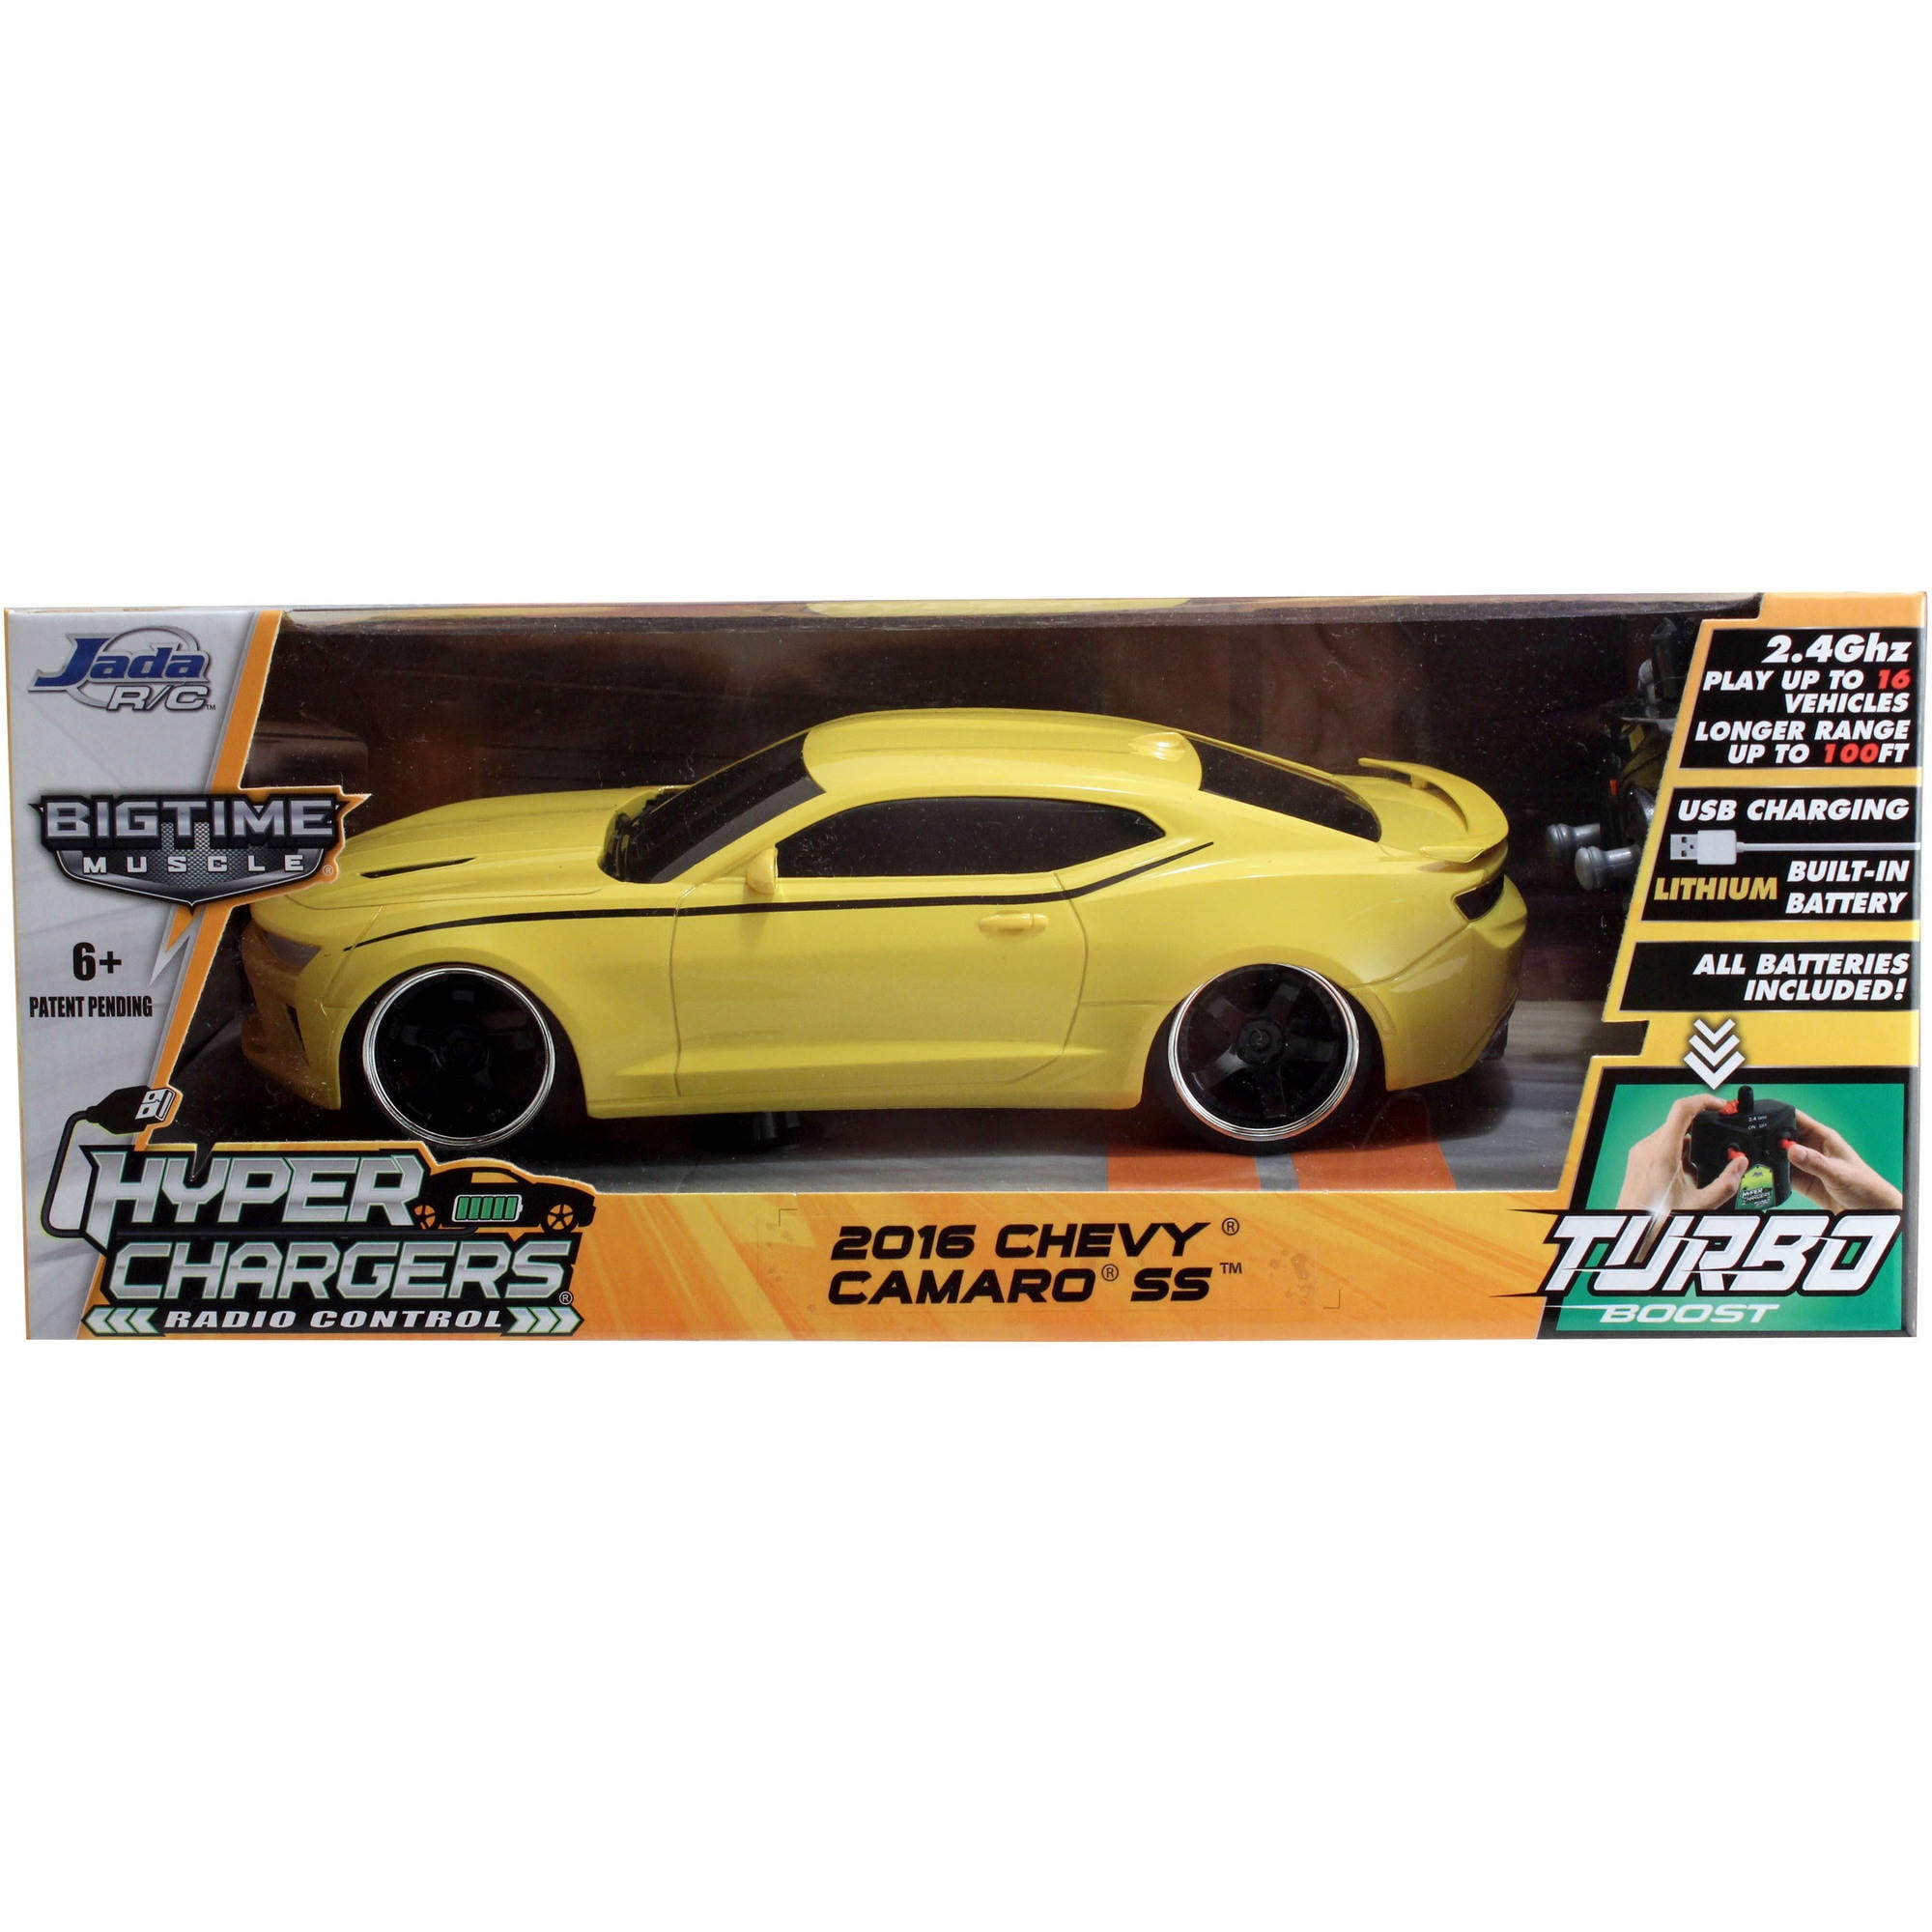 Yellow Jada Cars Radio Control Hyperchargers 2016 Chevy Camaro Scale 1:16 